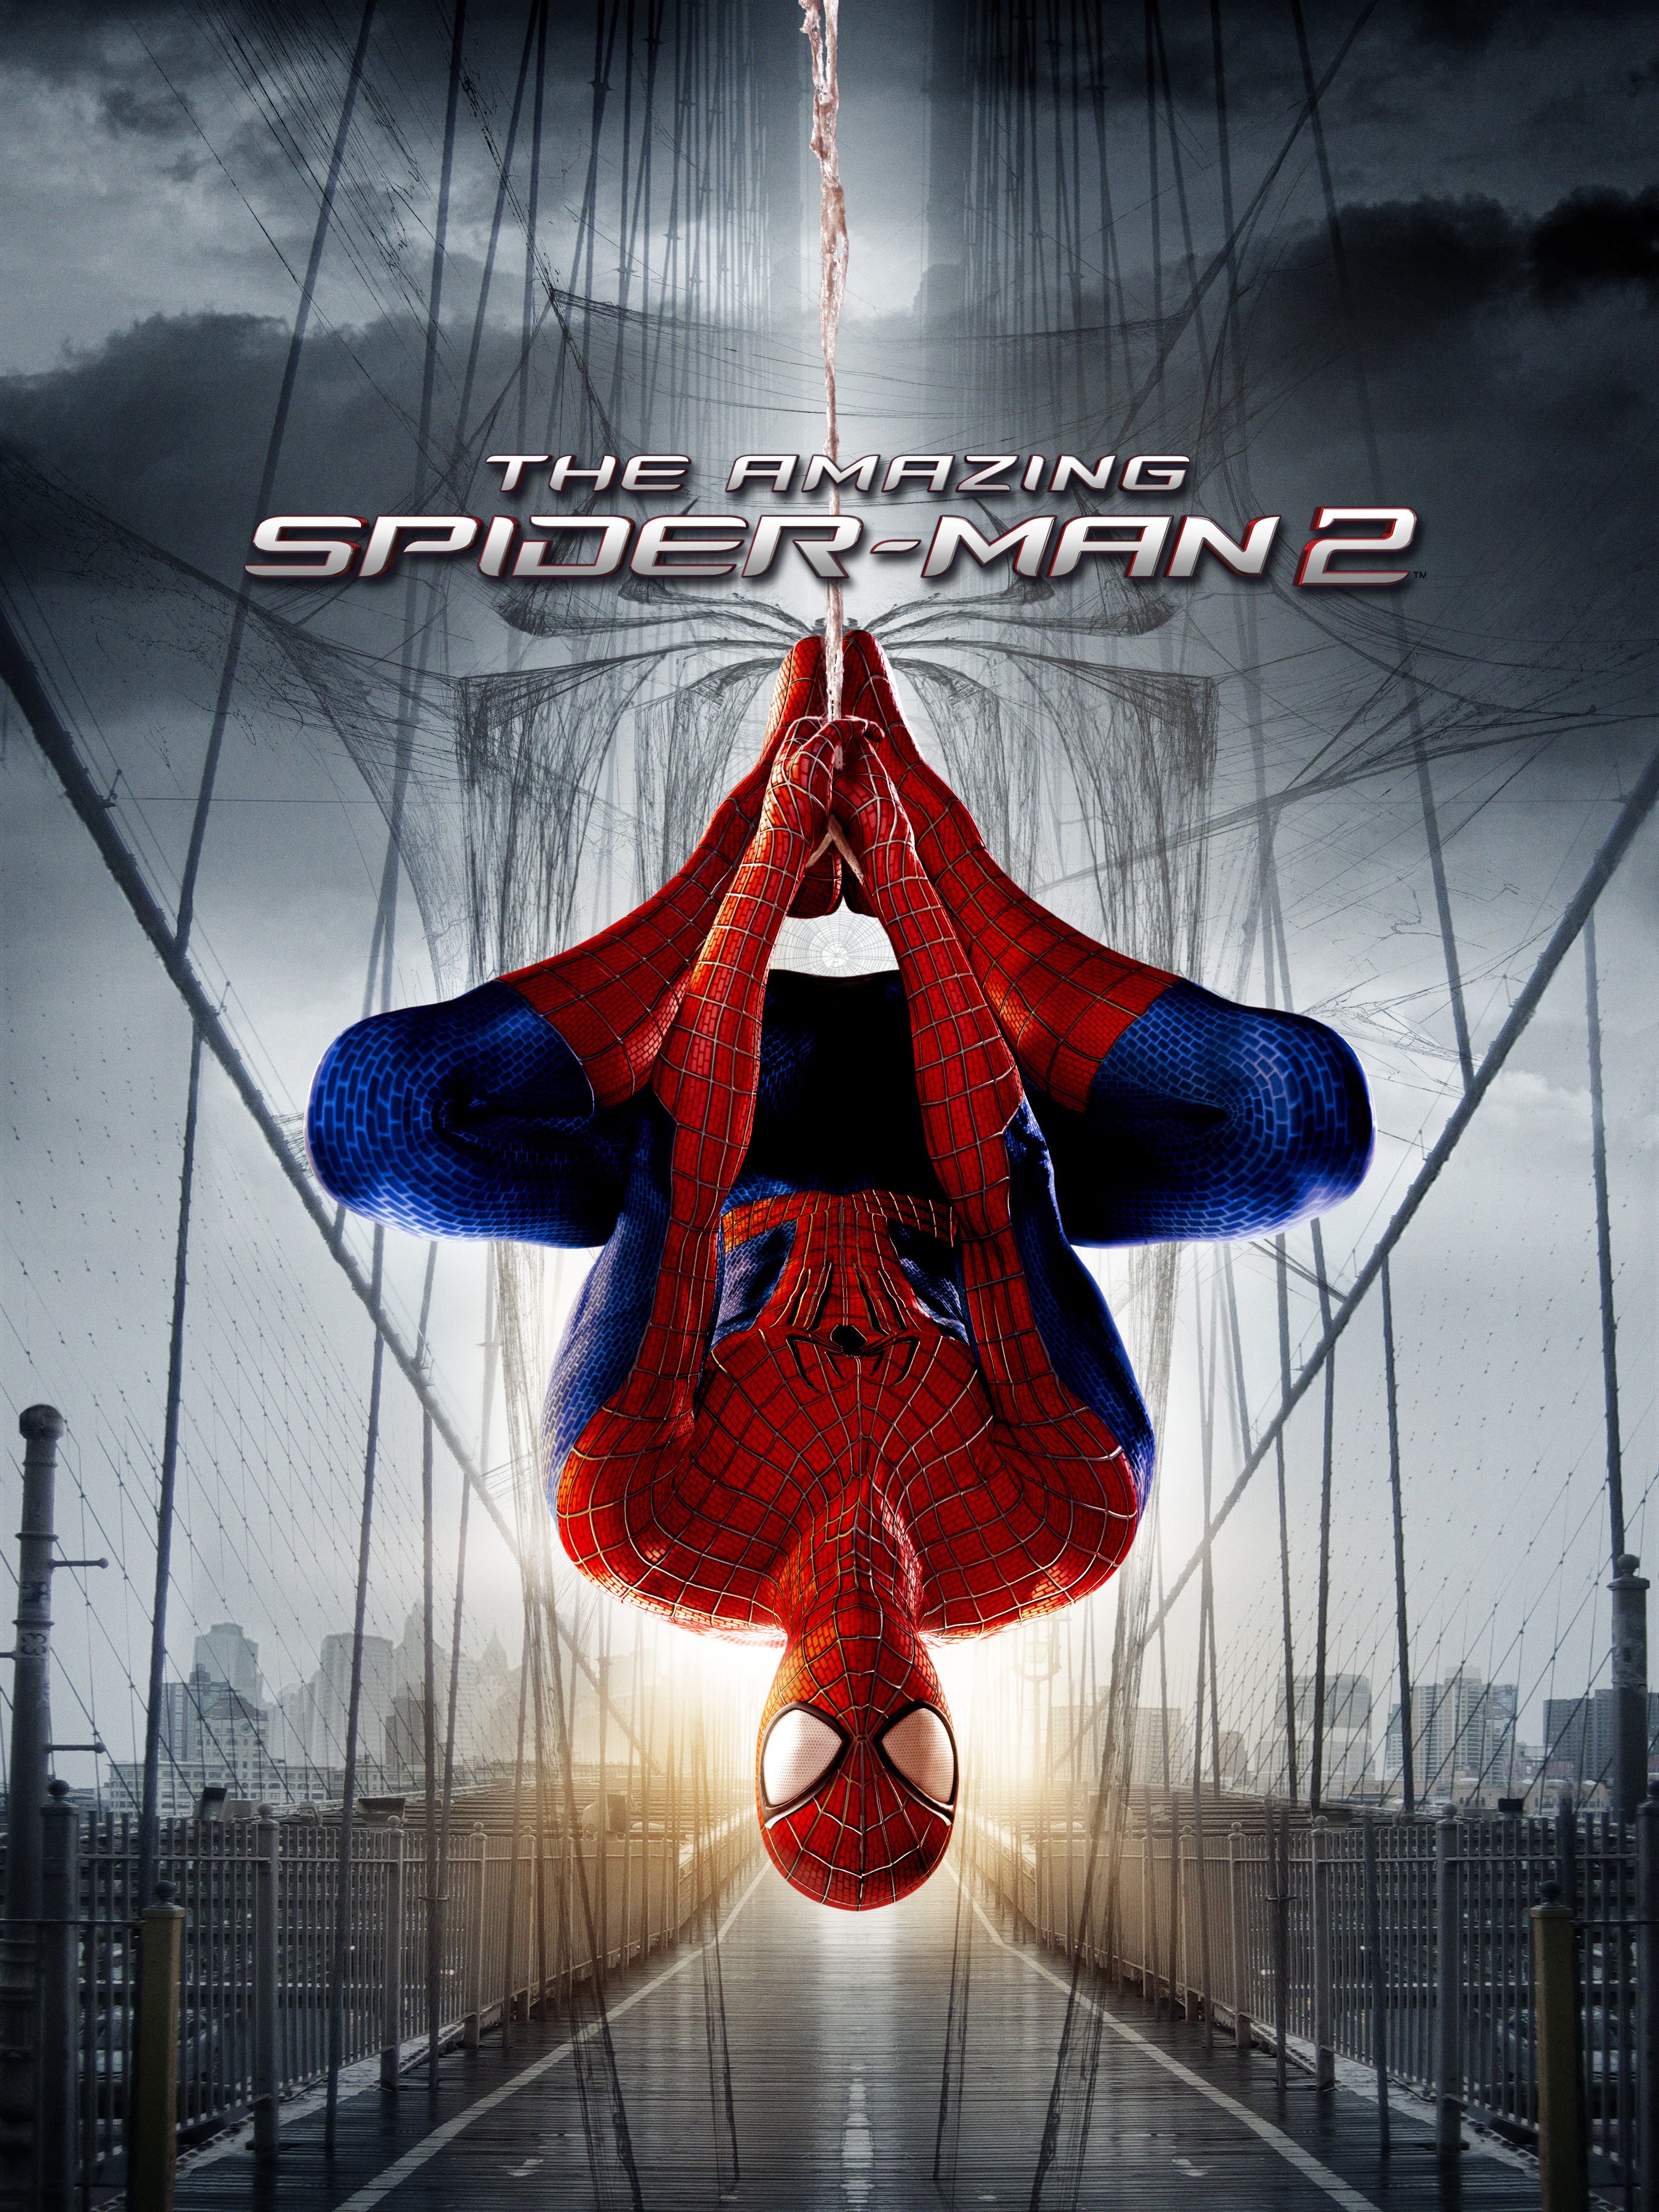 marvel spider man 2 download free